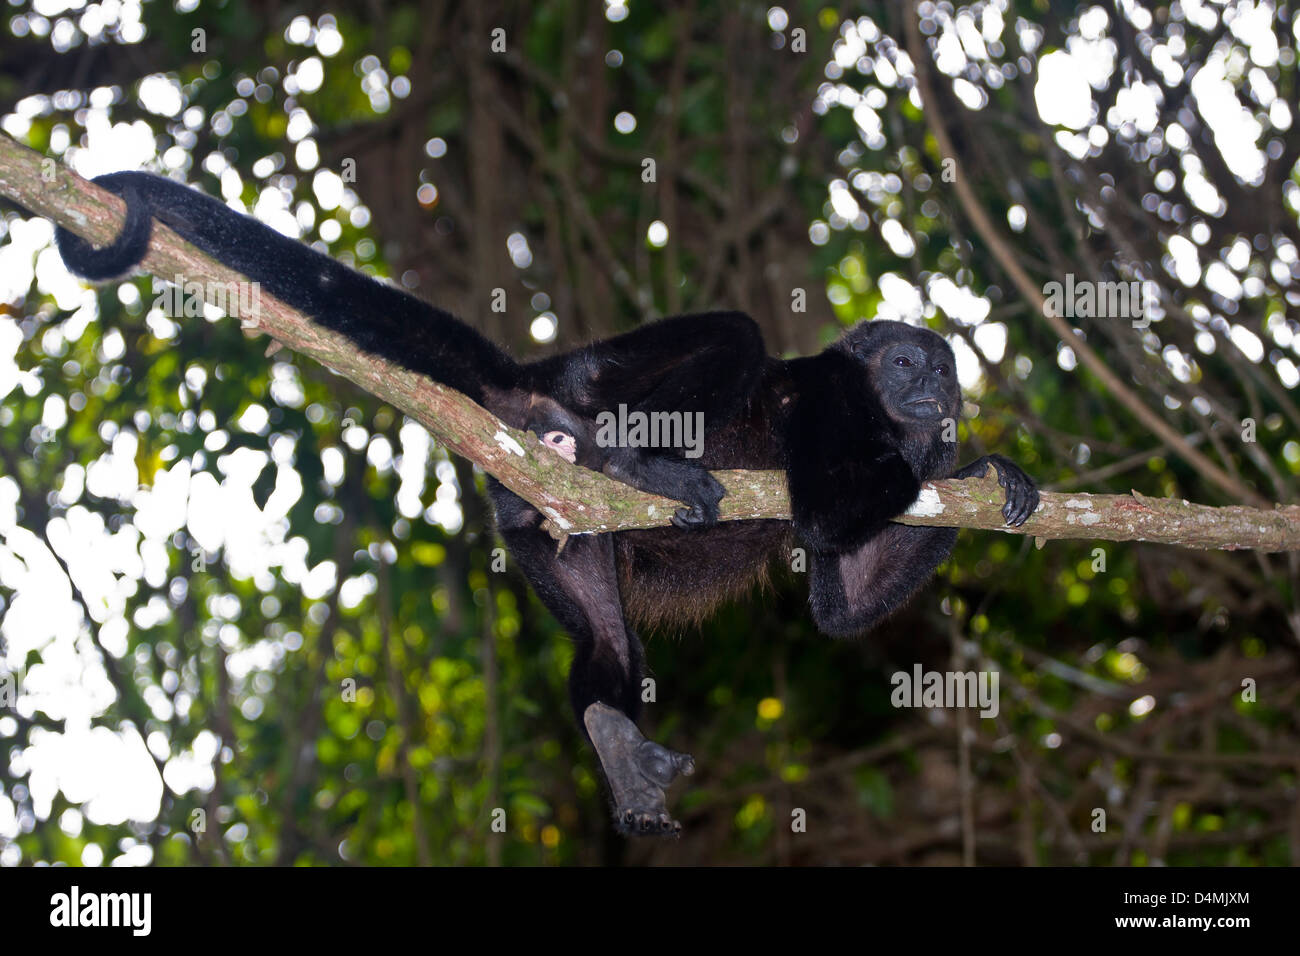 Howler monkey in a tree (Alouatta paliatta) Stock Photo